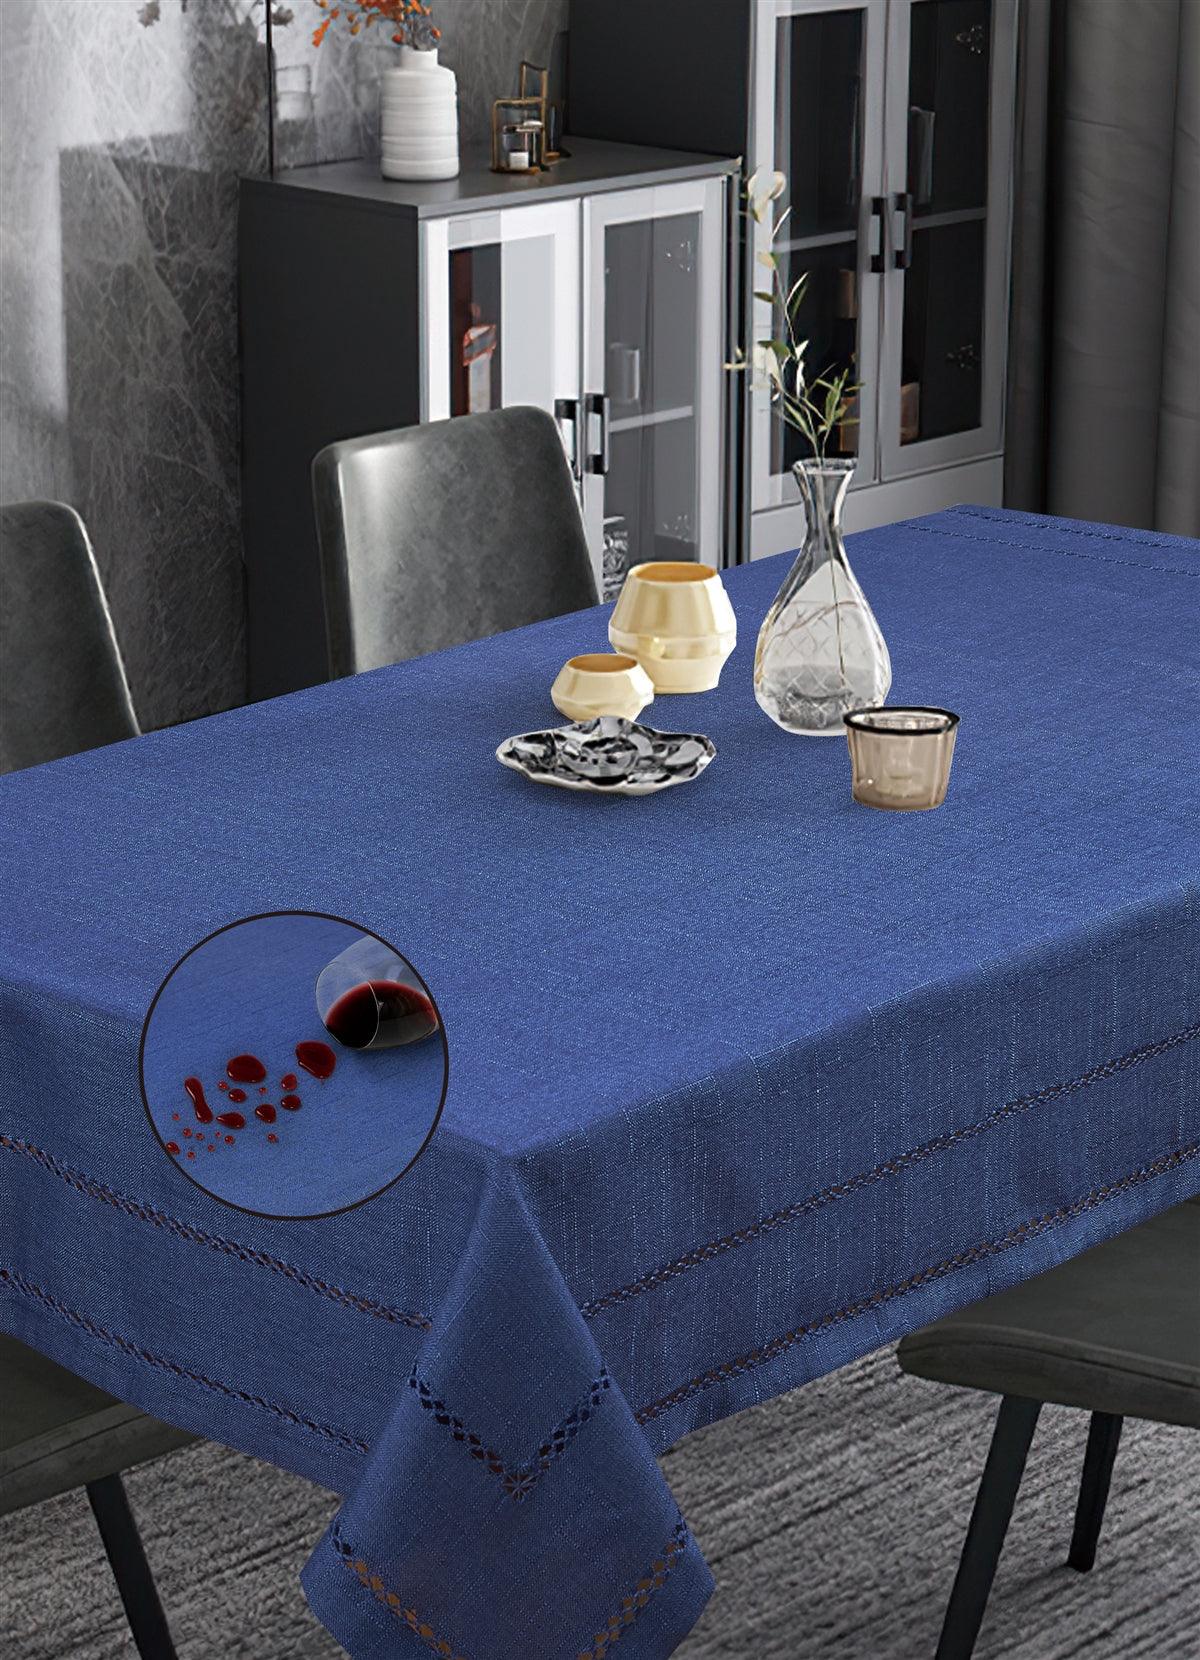 Hemstitch Tablecloth - Elegant Linen